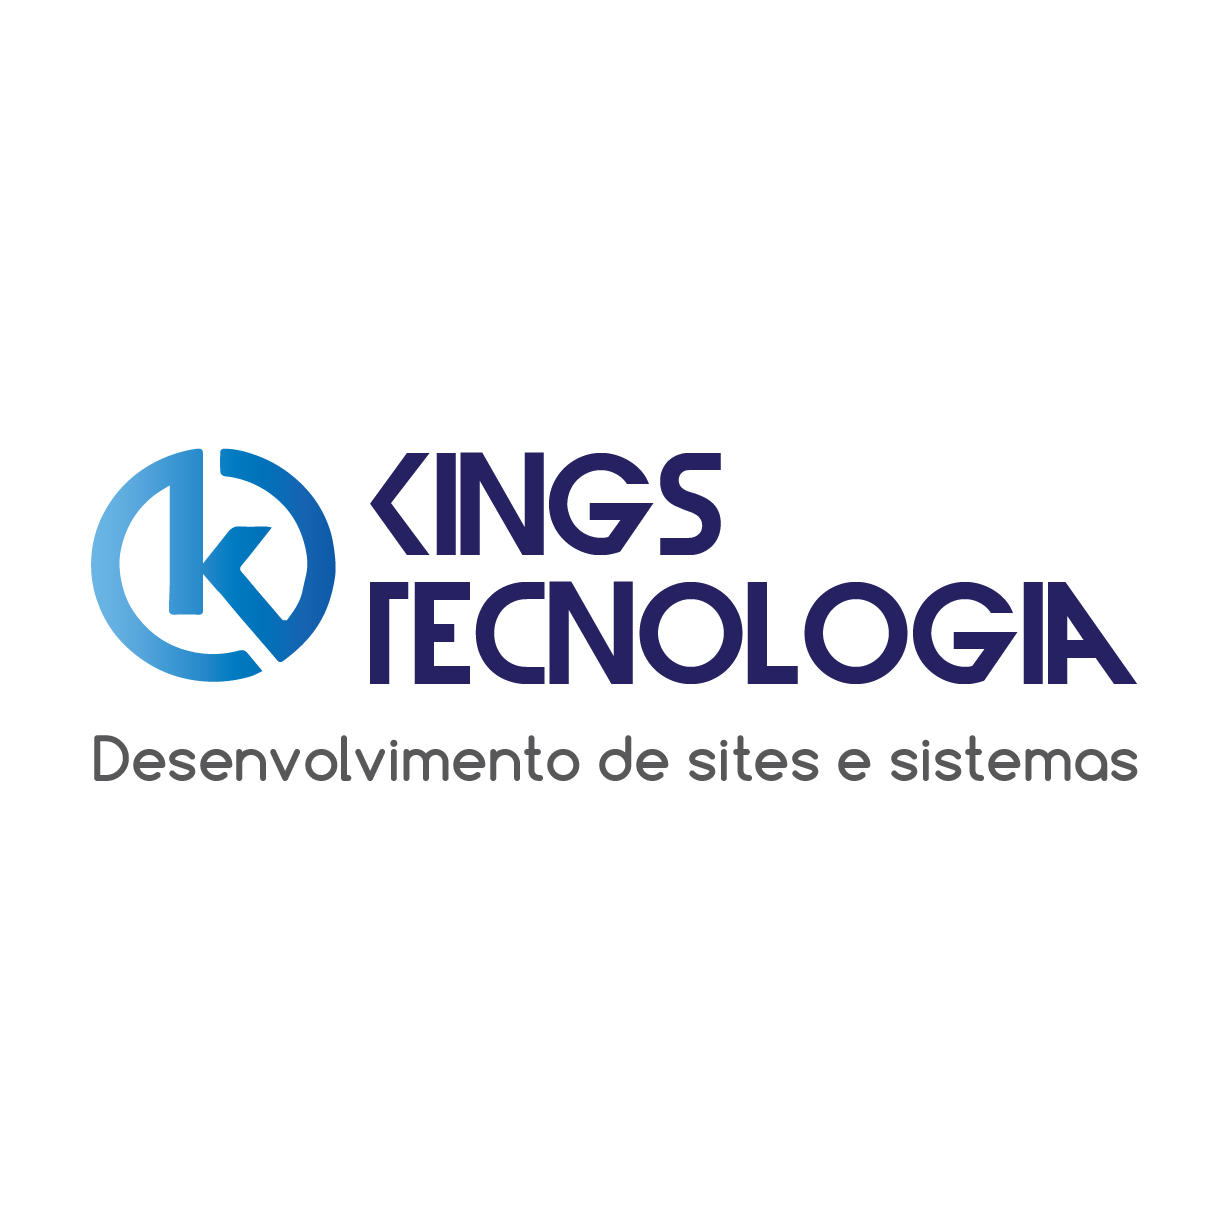 Kings Tecnologia